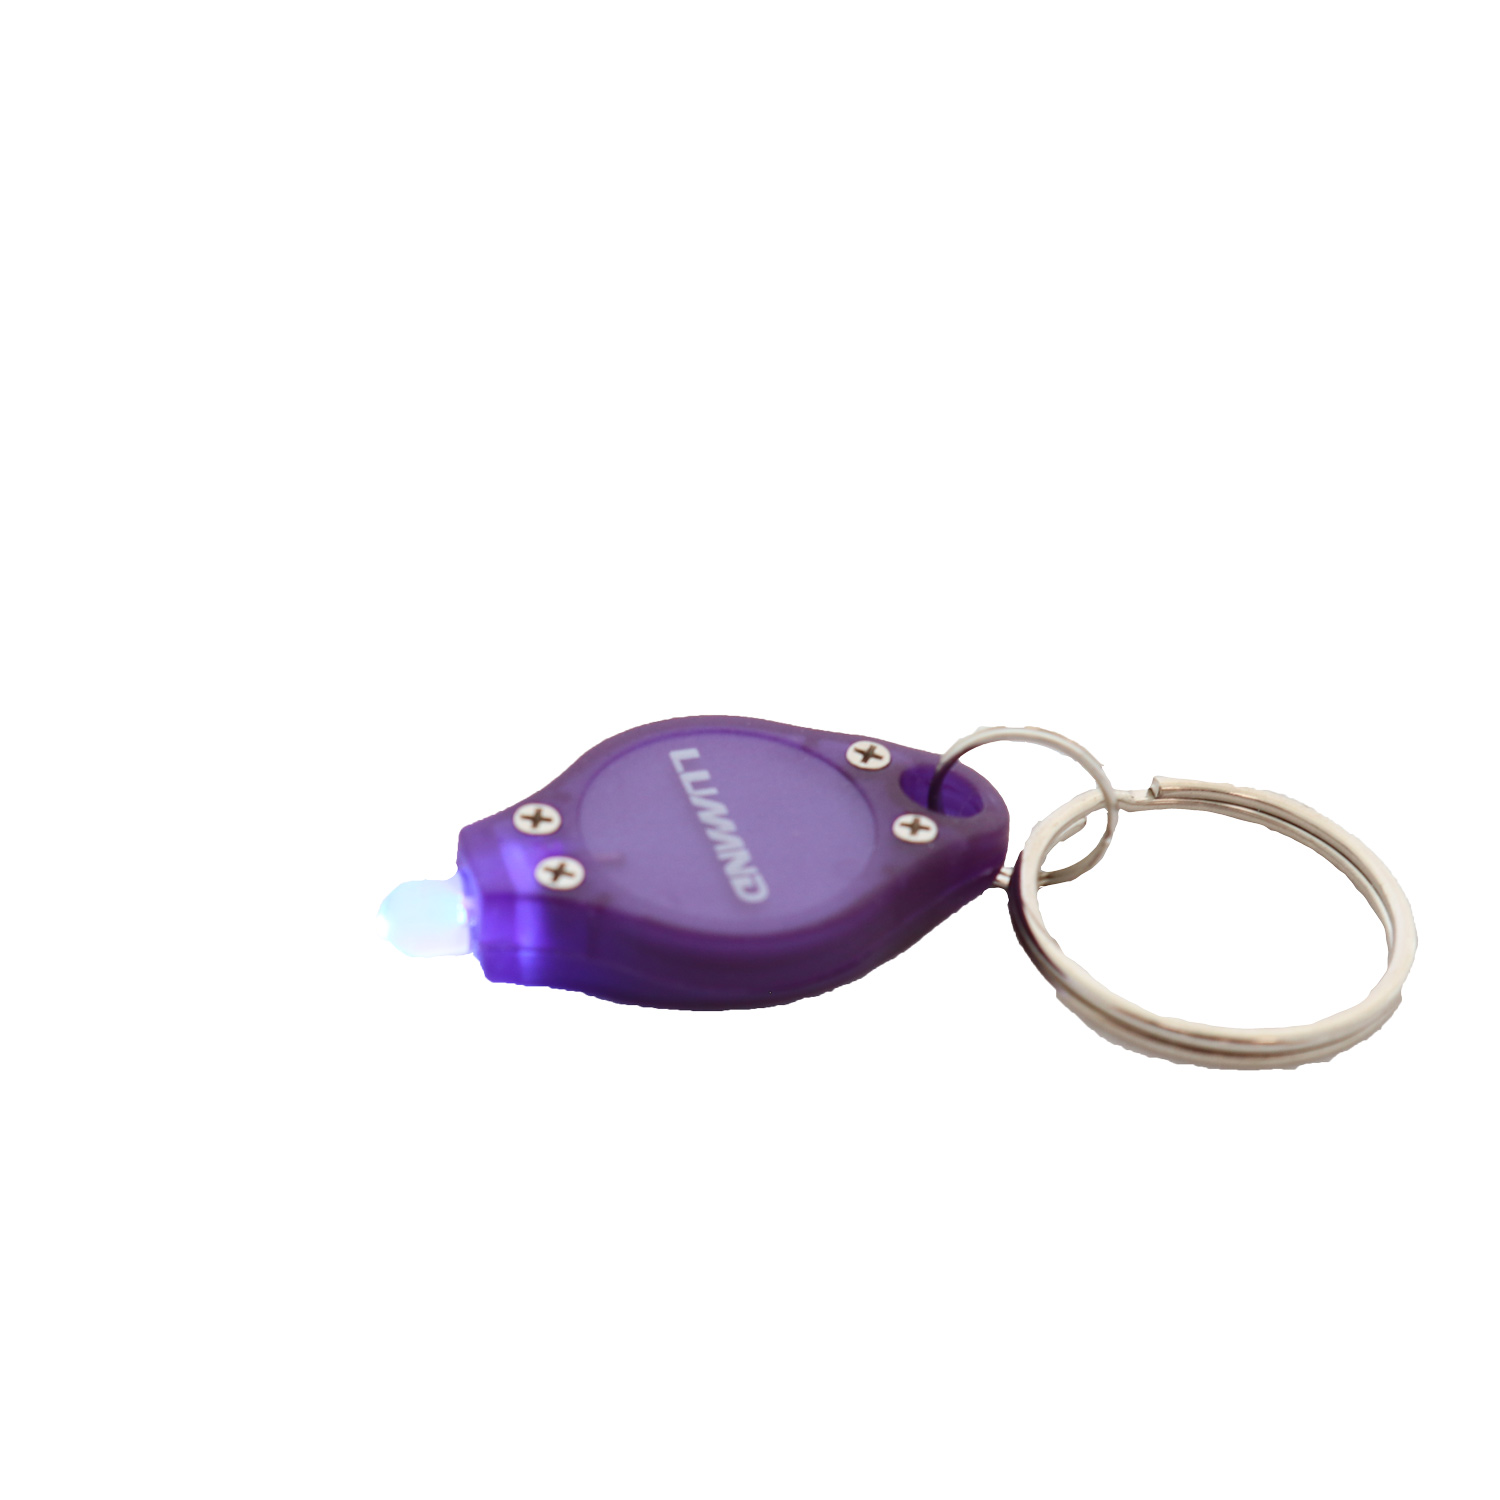 Crime Keychain Kit